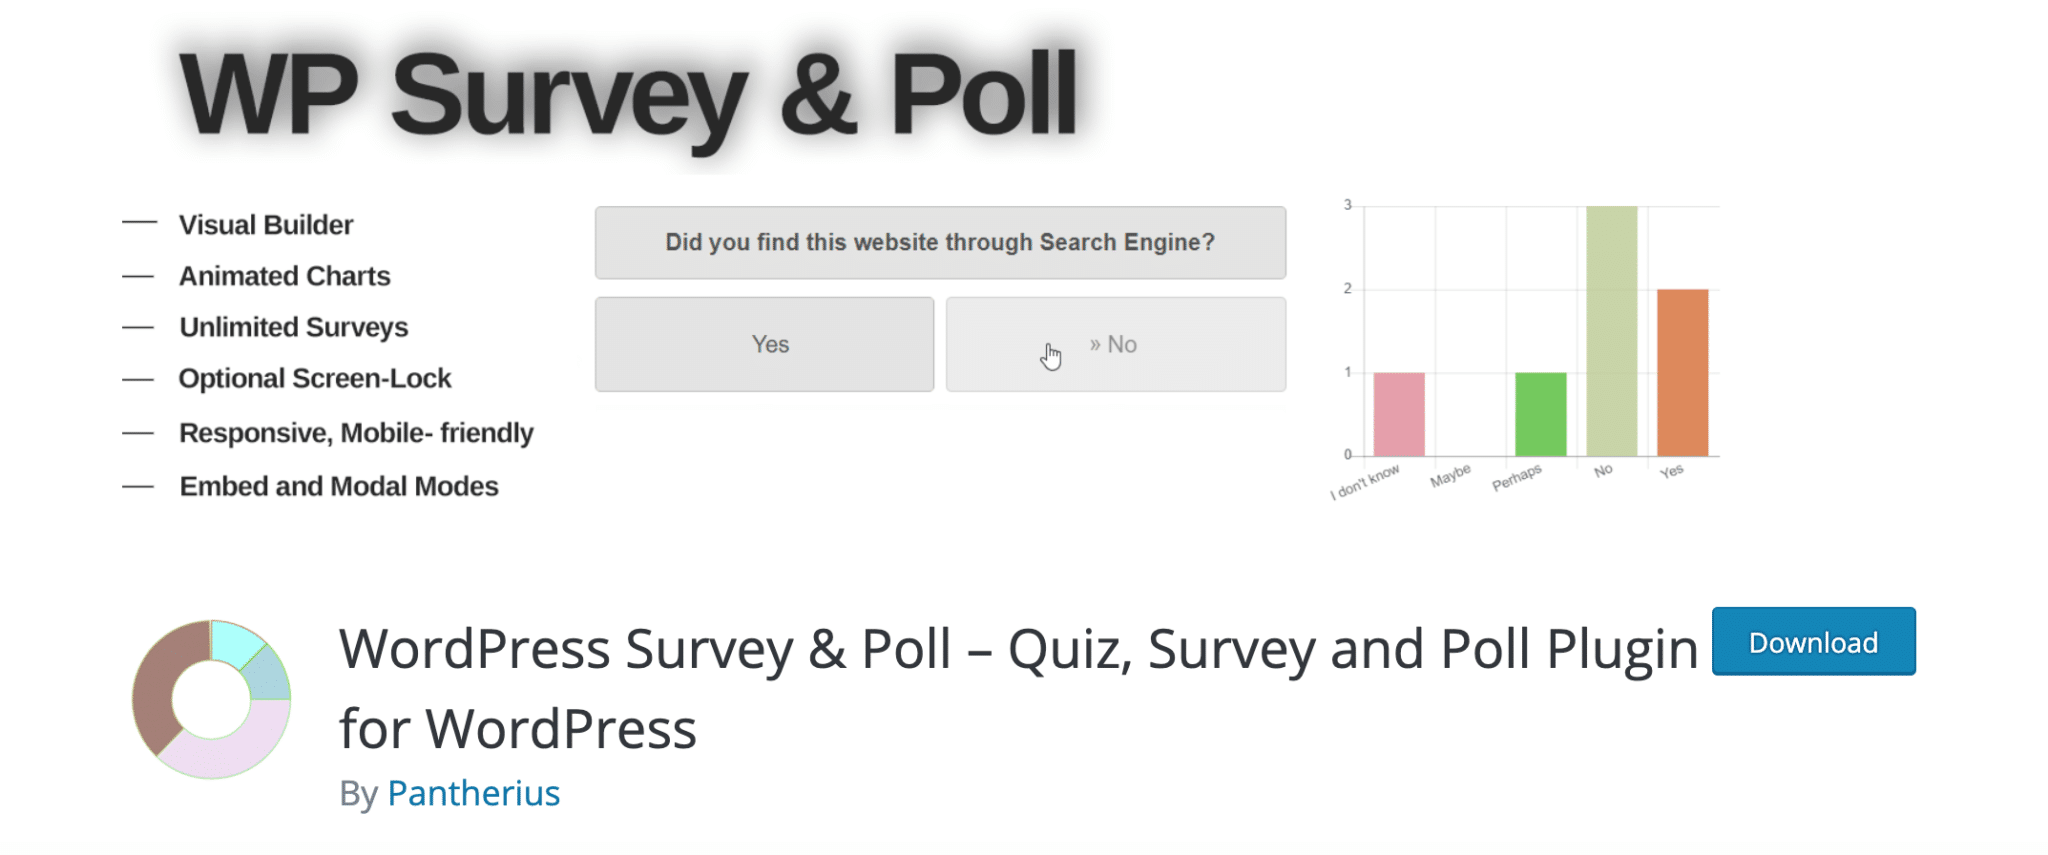 Wp Survey & Poll